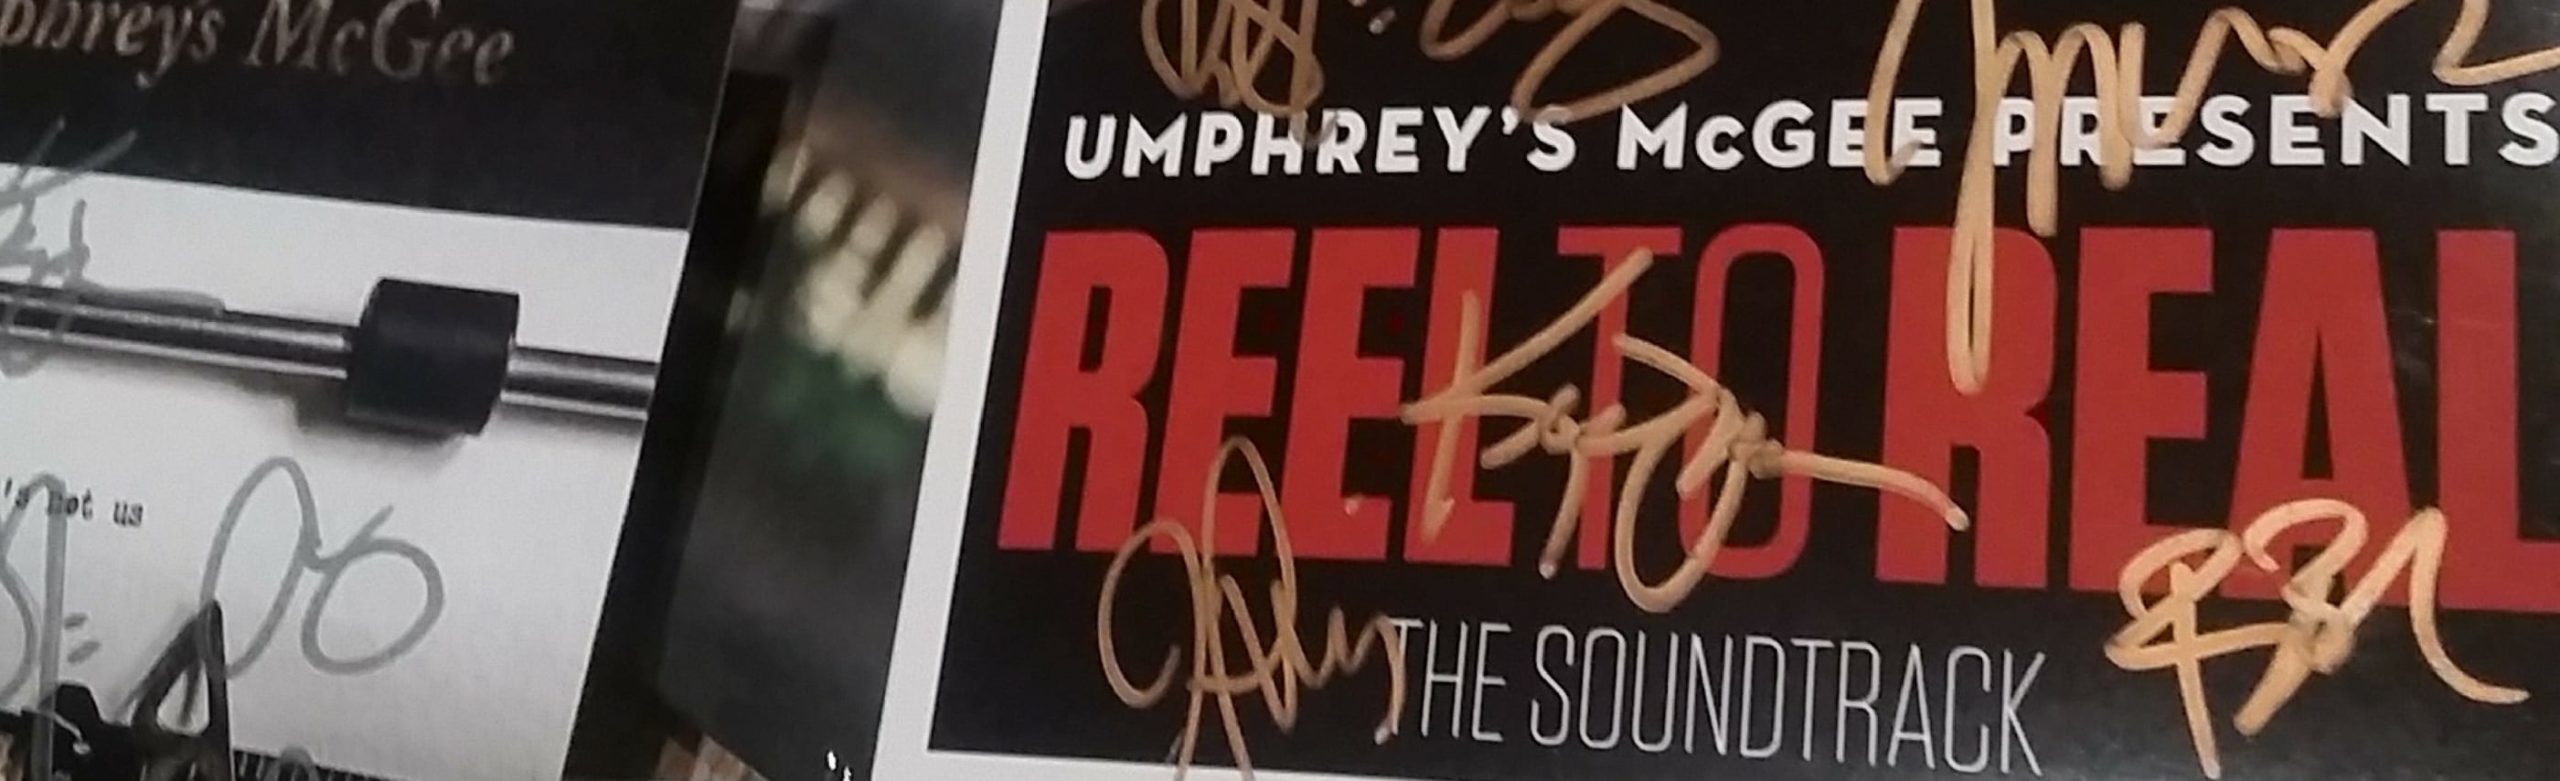 Umphrey’s McGee Autographed Merchandise Giveaway Image